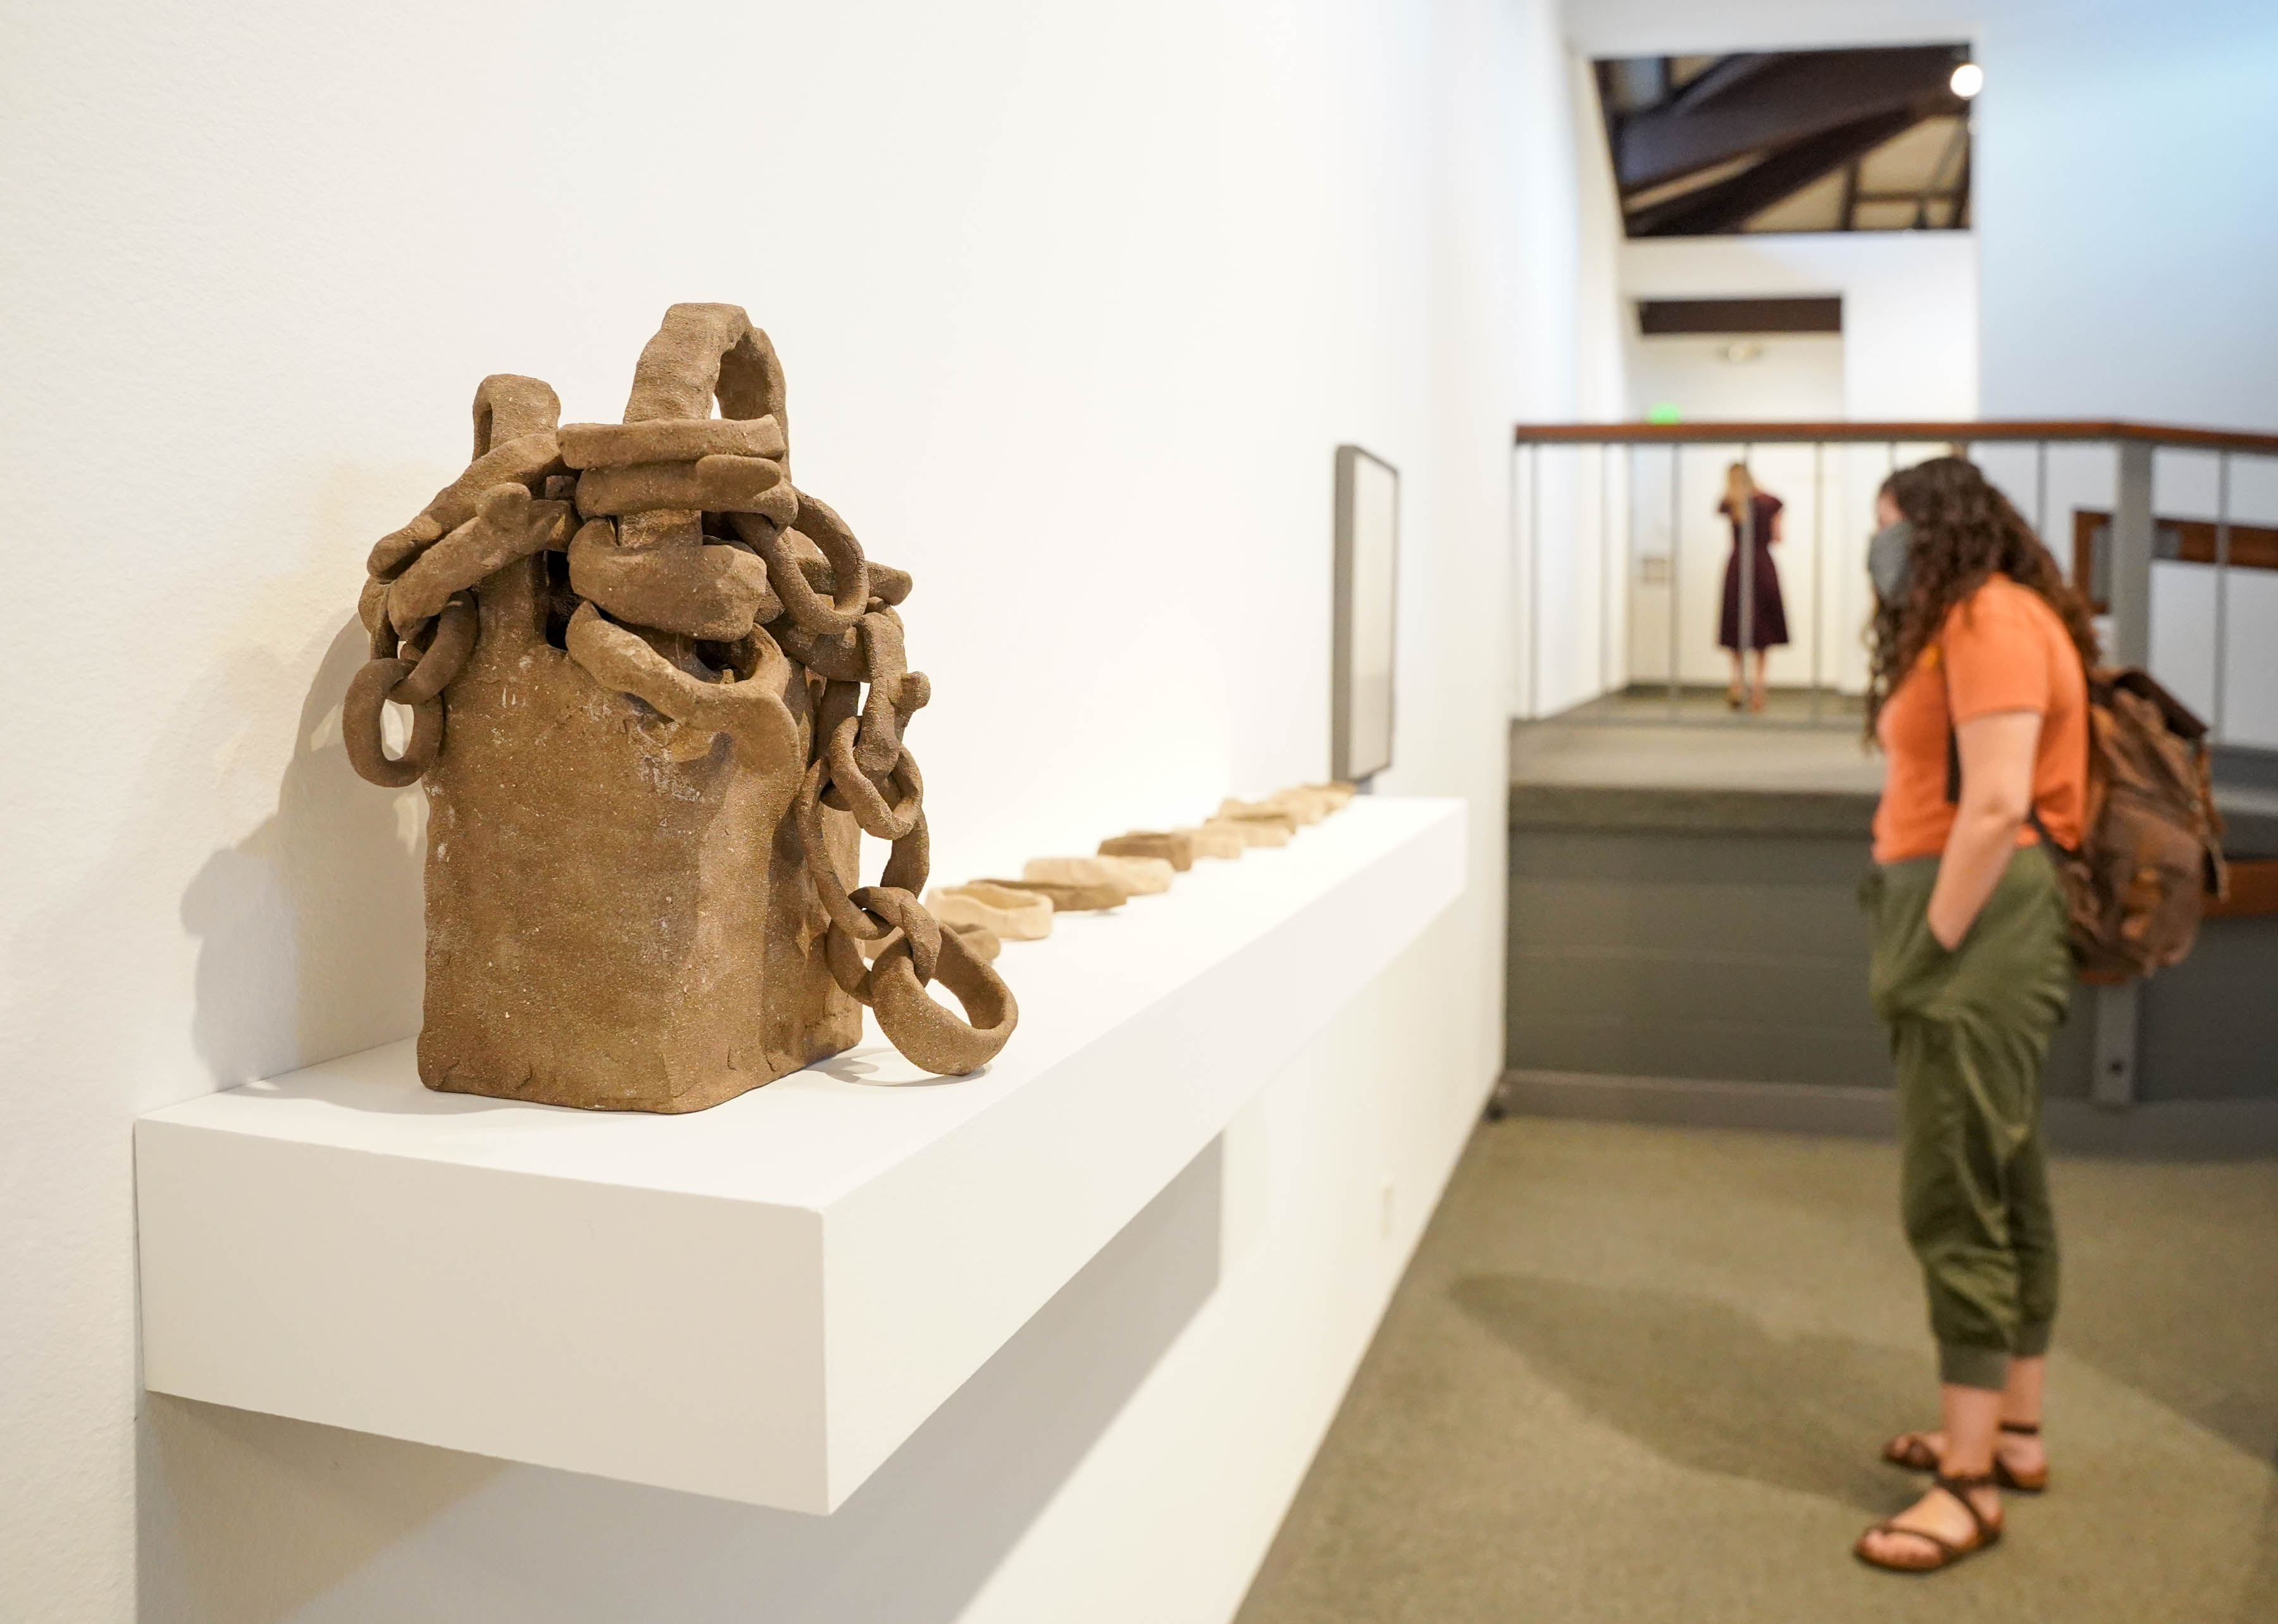 A visitor appreciating a sculpture at the Museum of Art